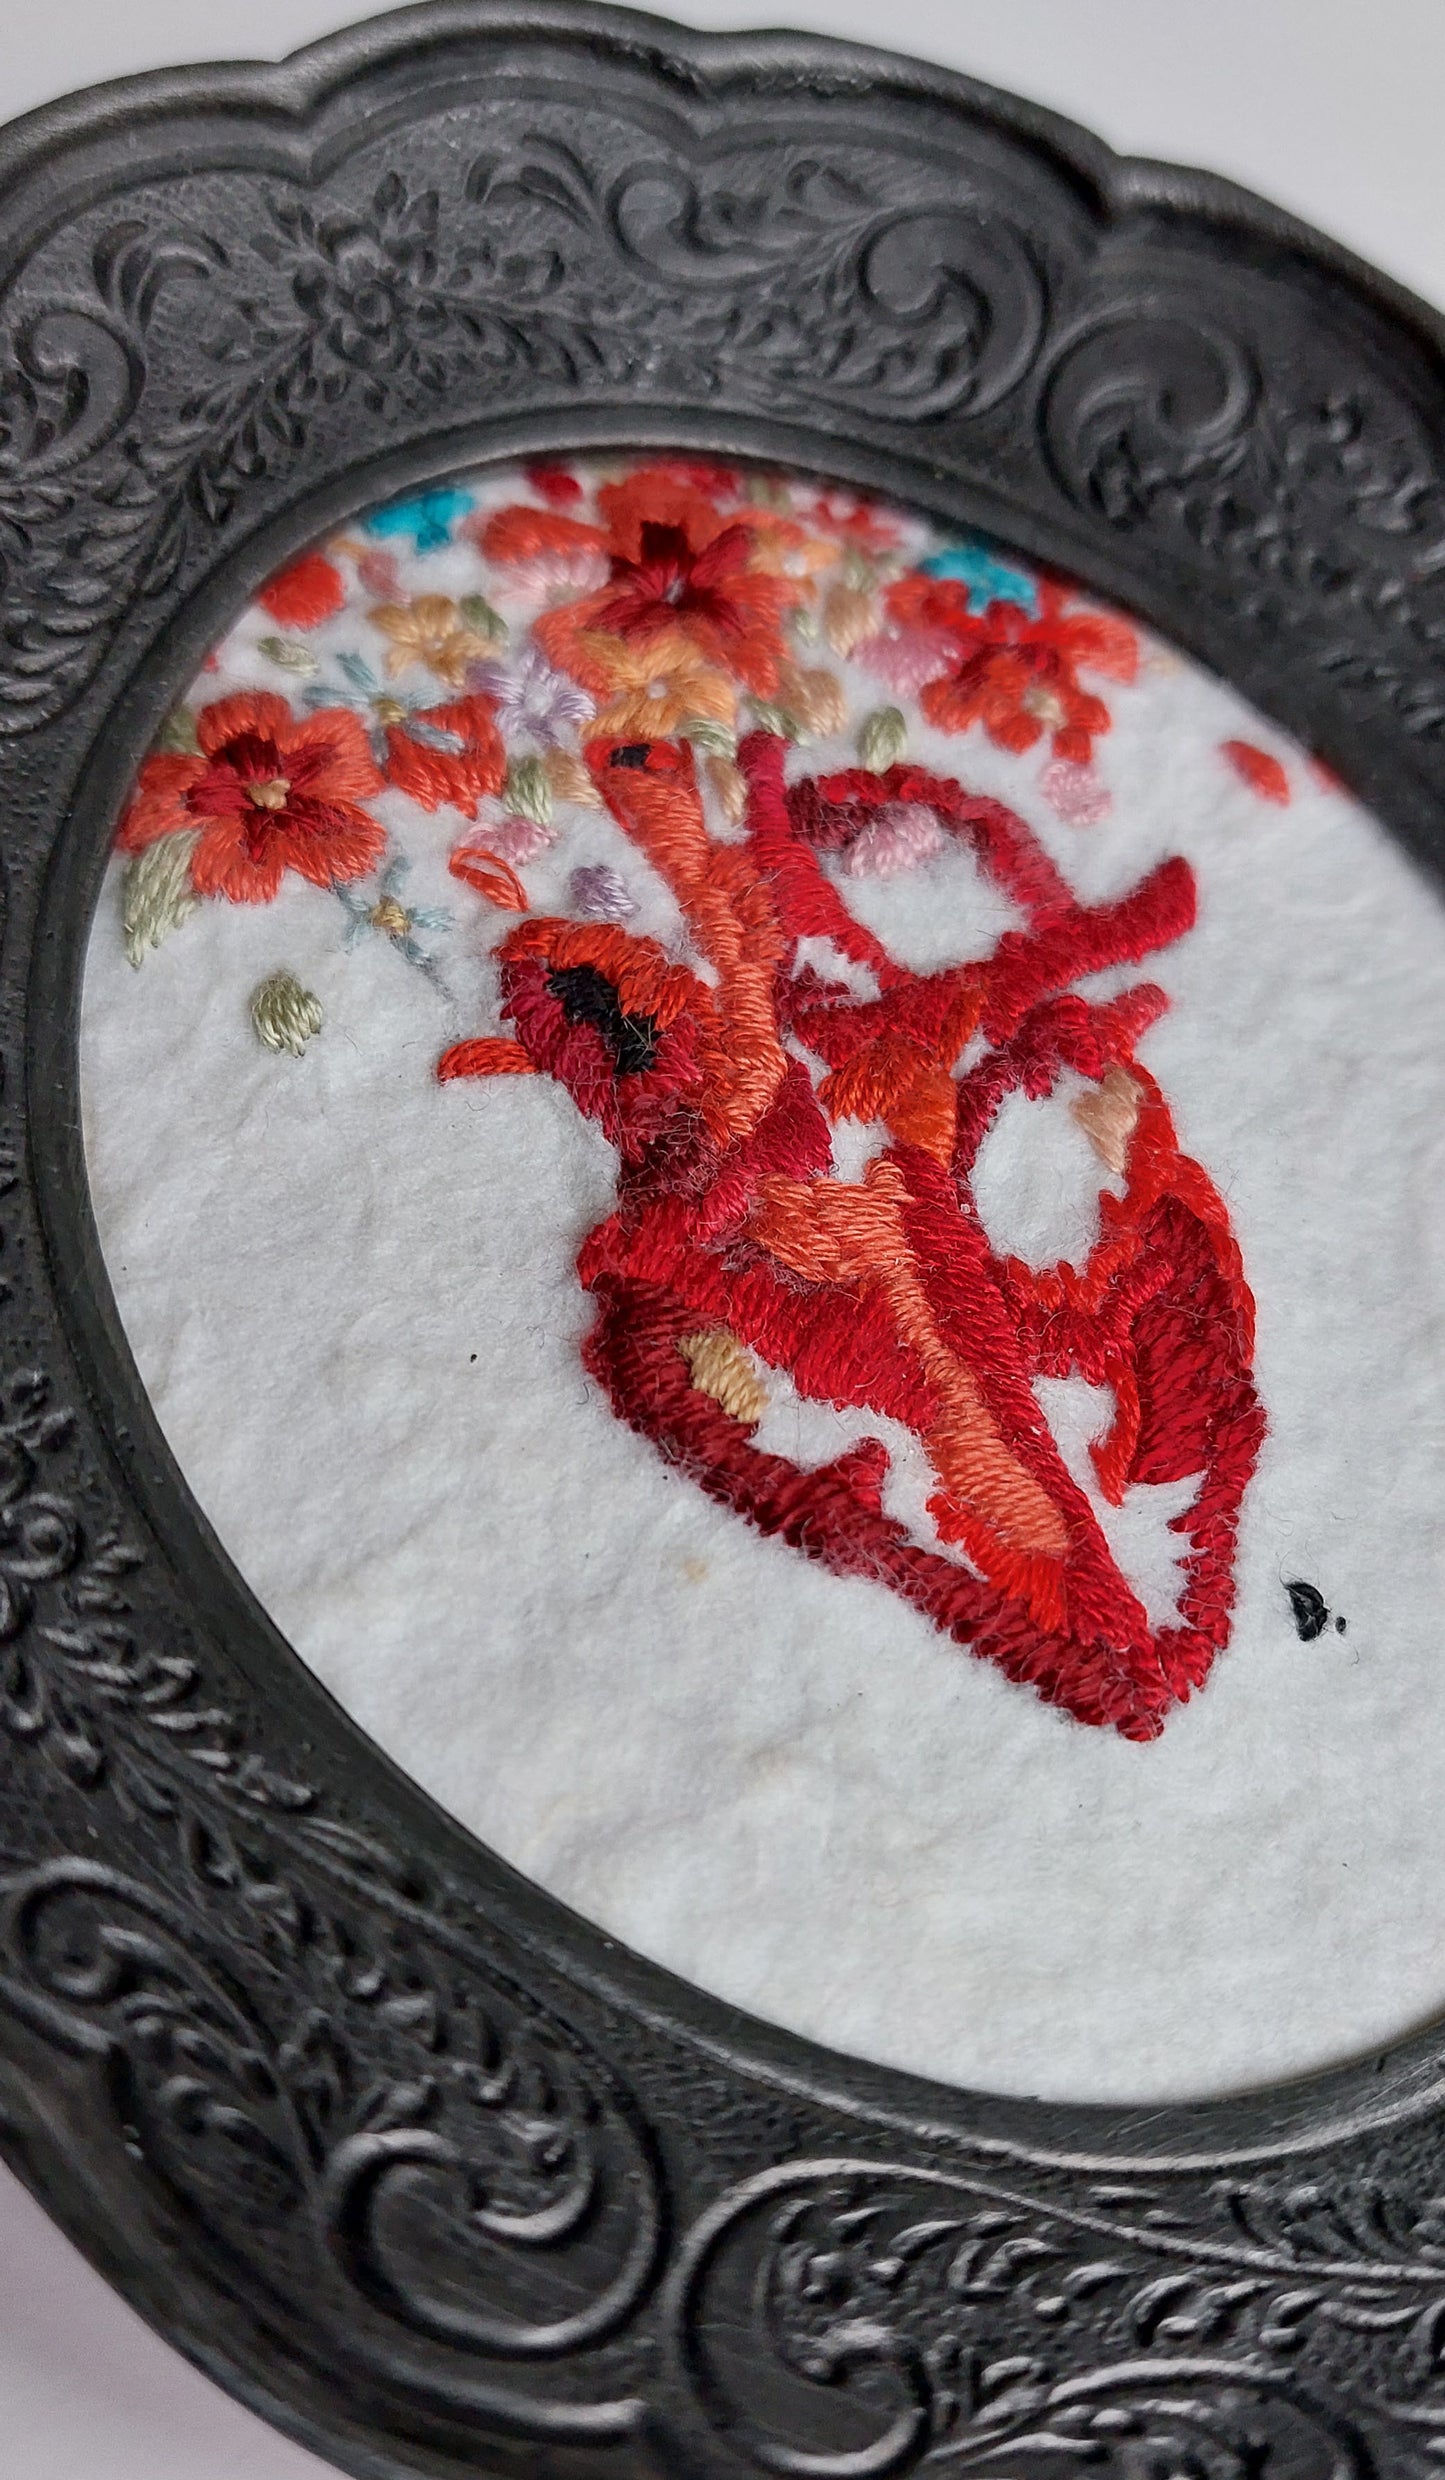 Embroidery Heart 8 metri d'amore - Drunkenrabbit